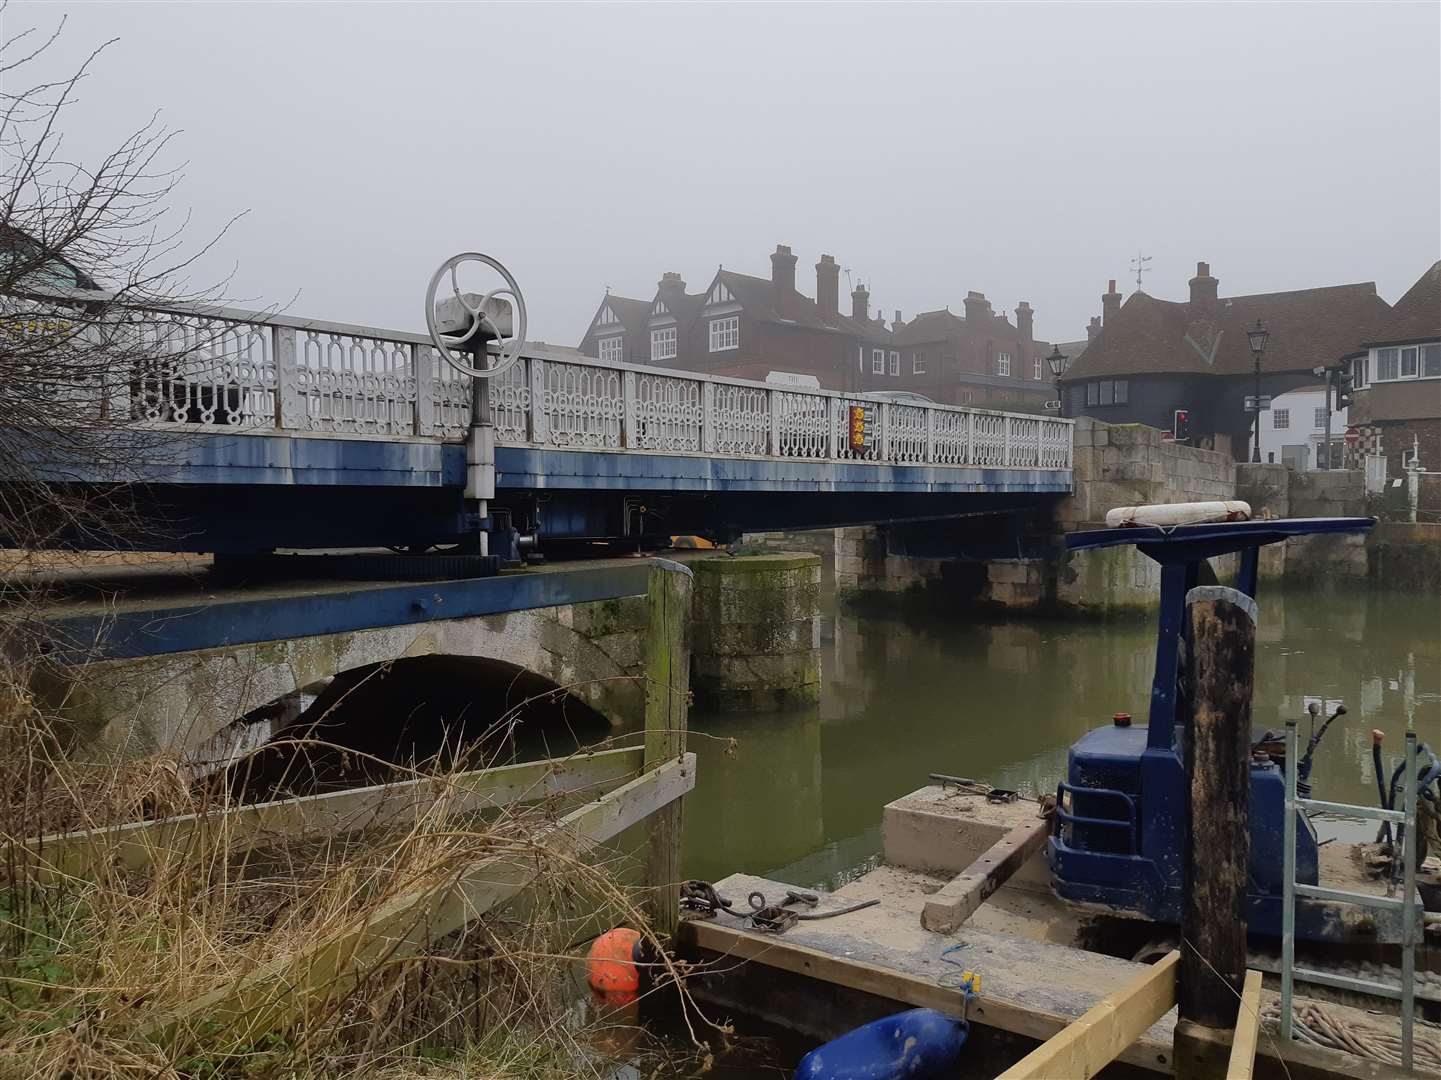 Sandwich Toll Bridge has not been operating properly since December